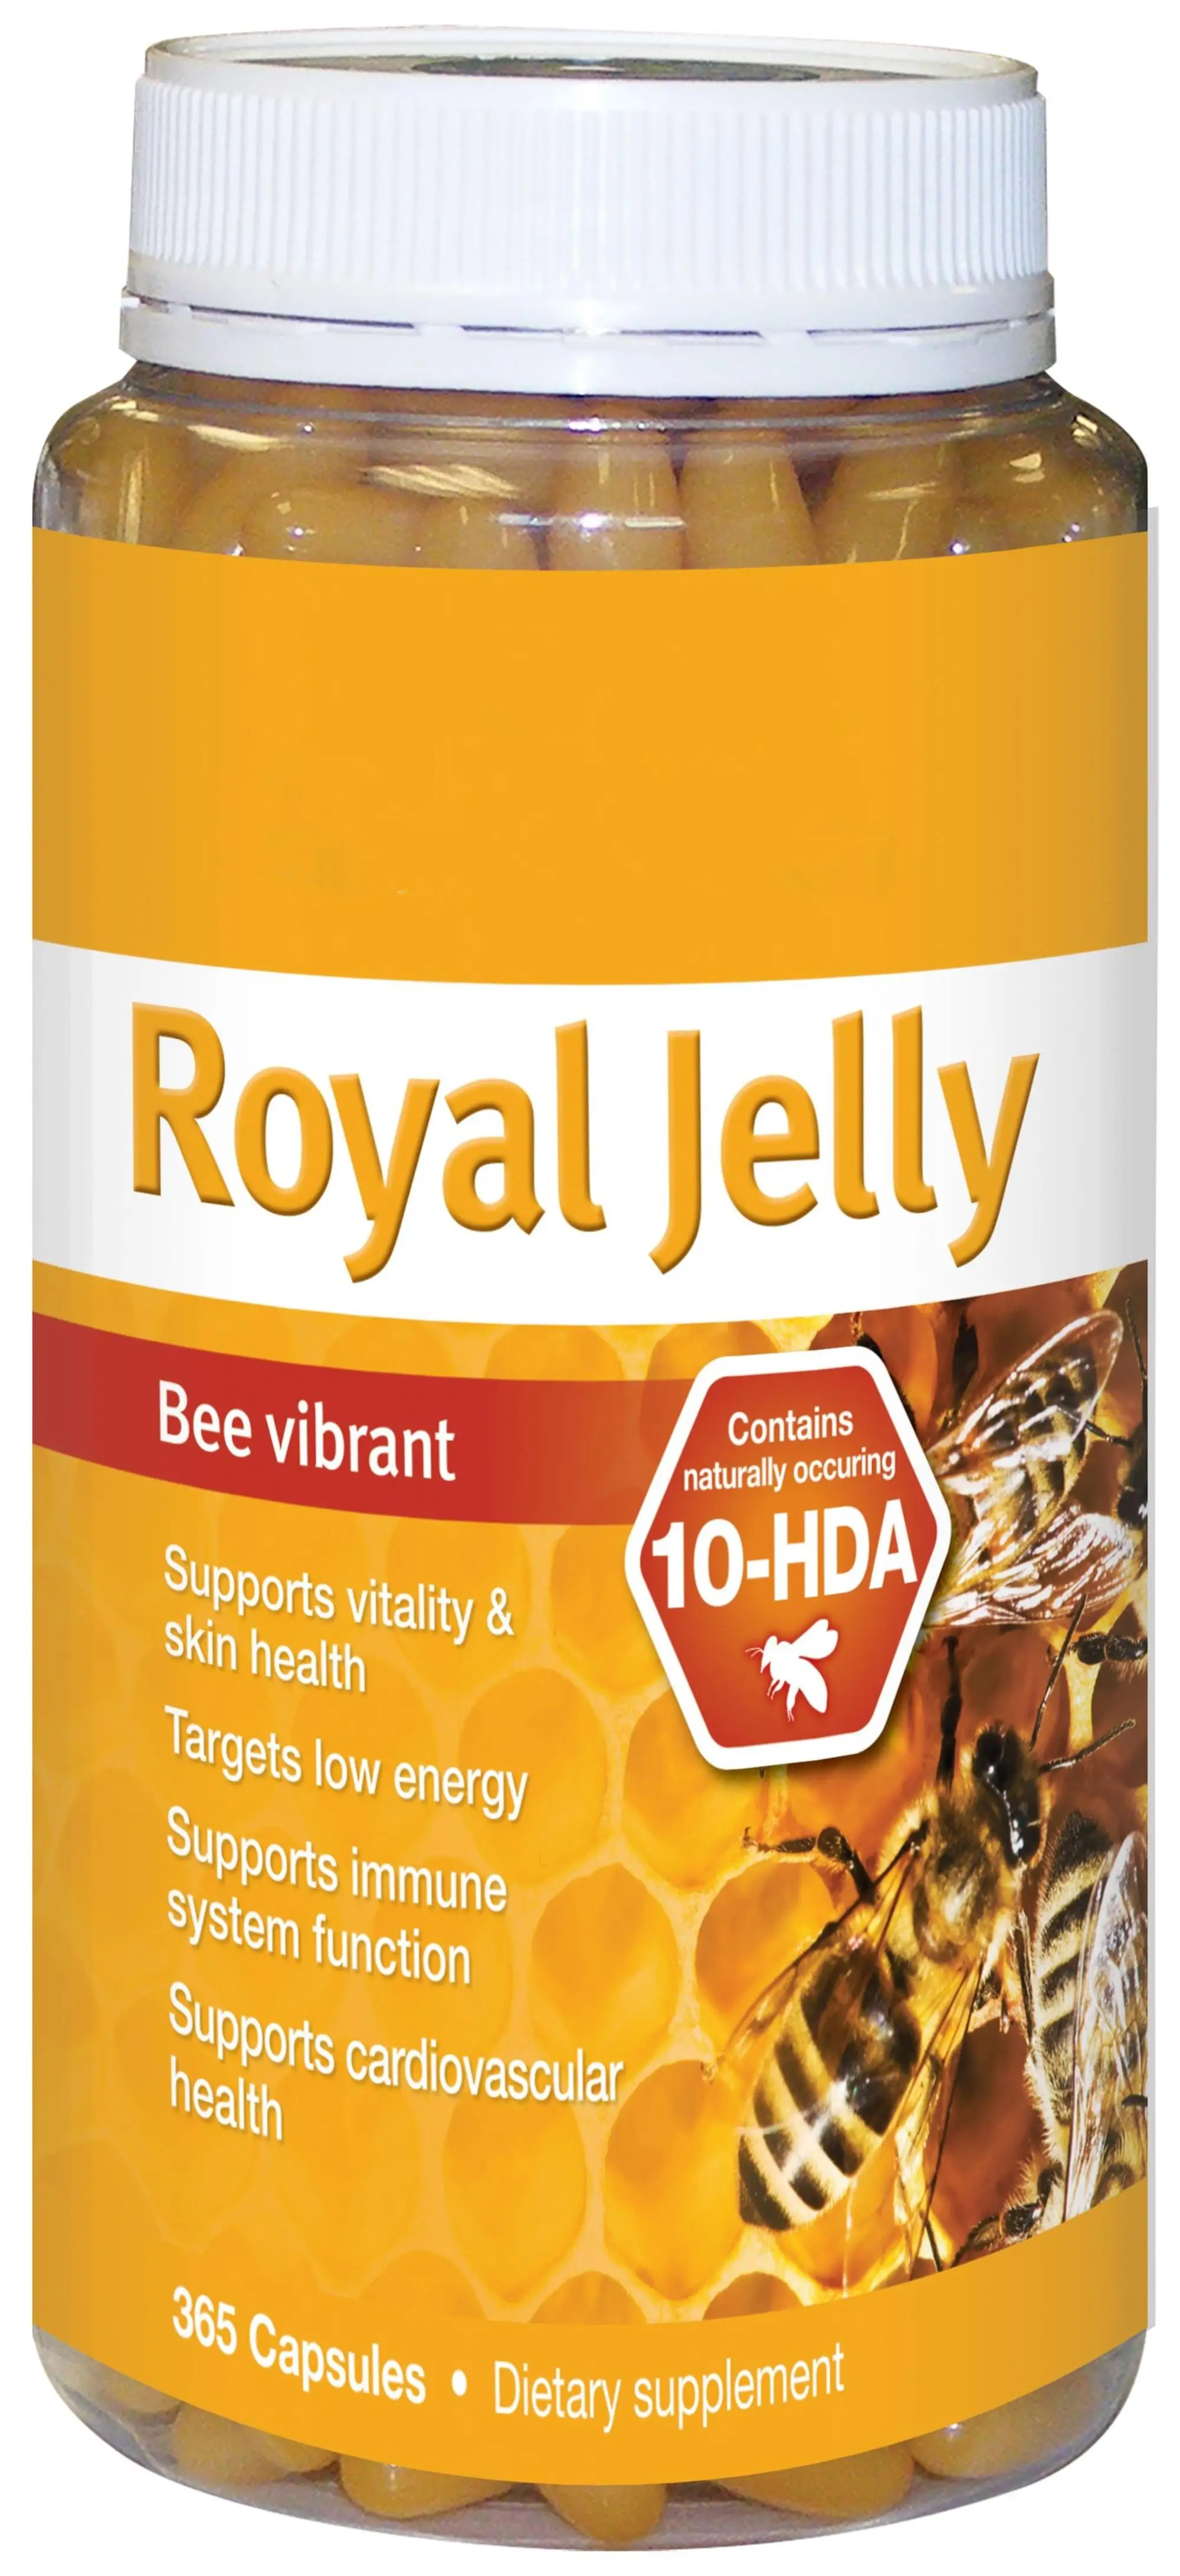 Royal_jelly_Vitality_4.jpg